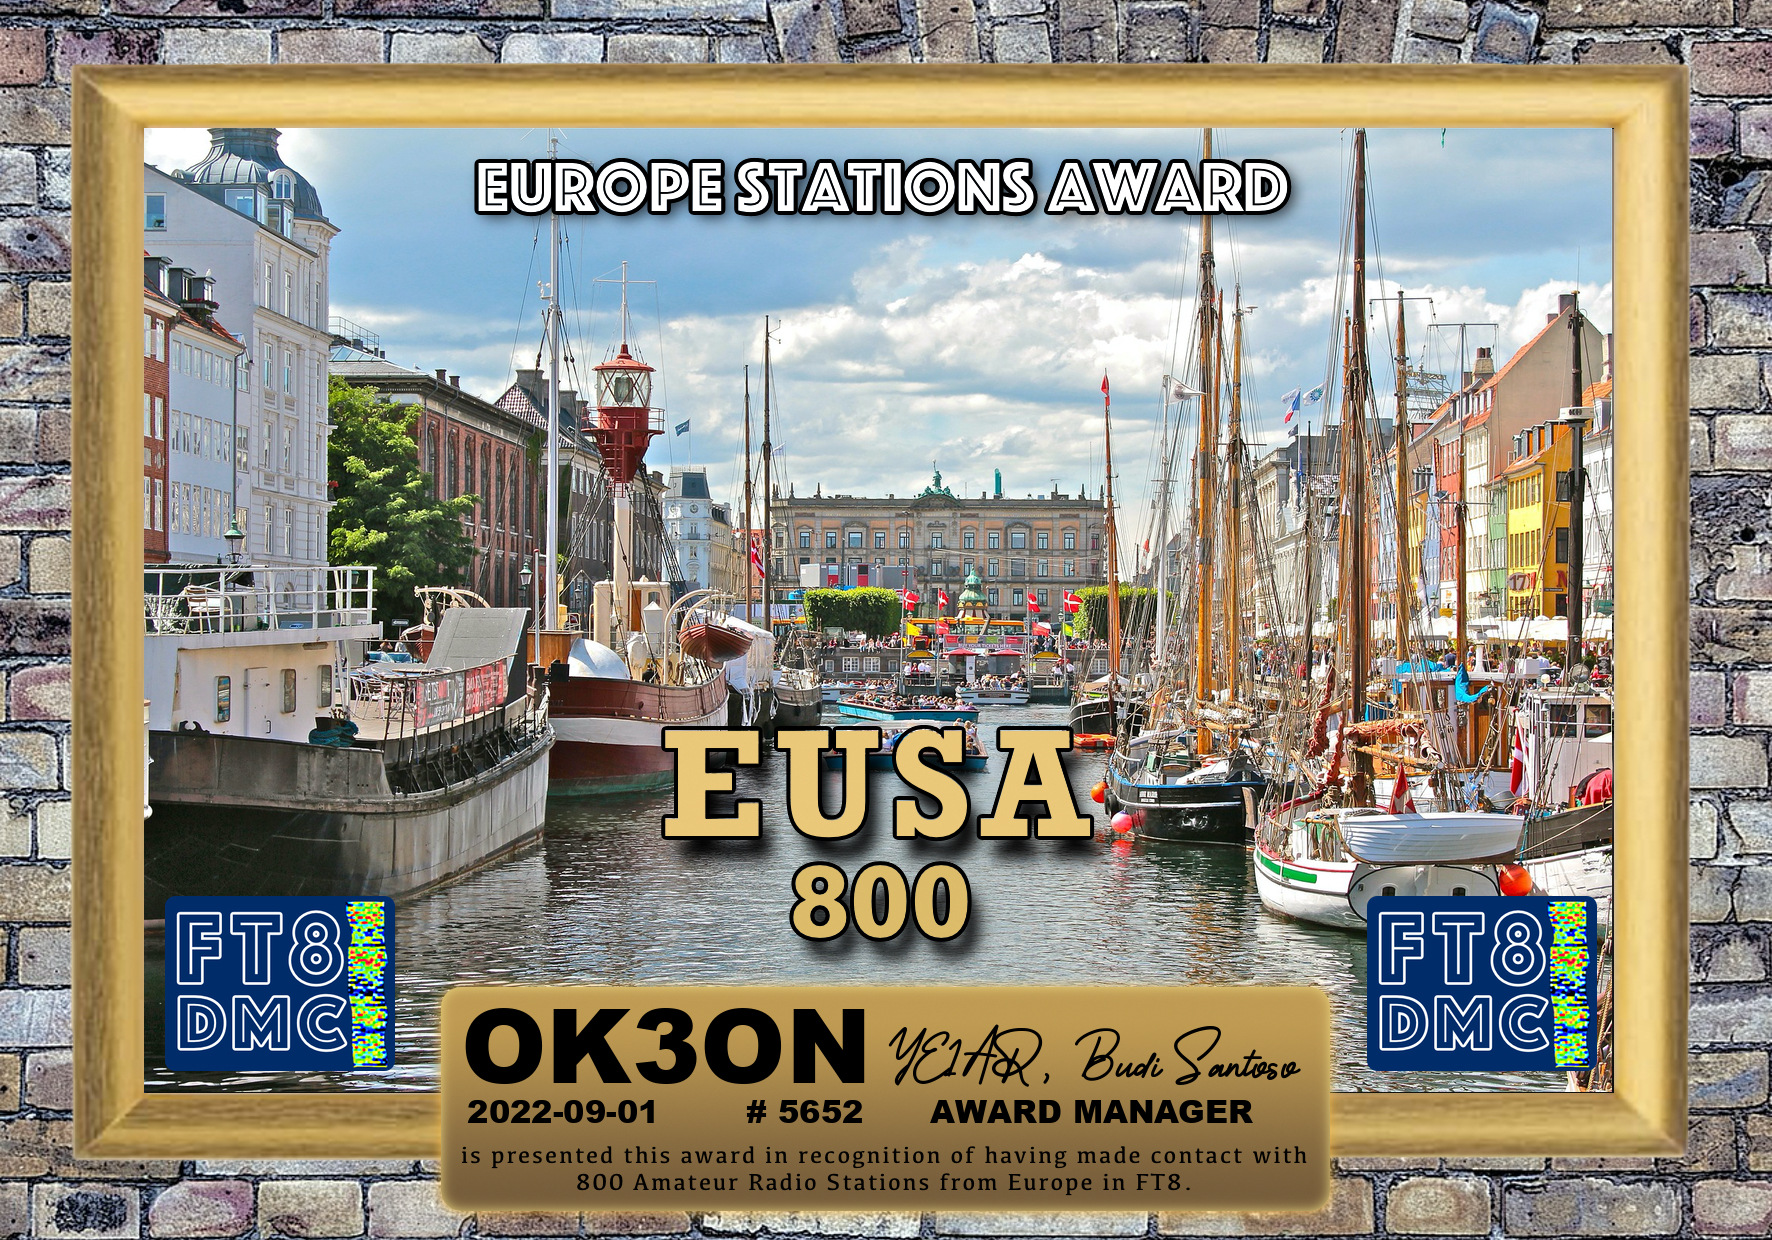 awards/OK3ON-EUSA-800_FT8DMC.jpg